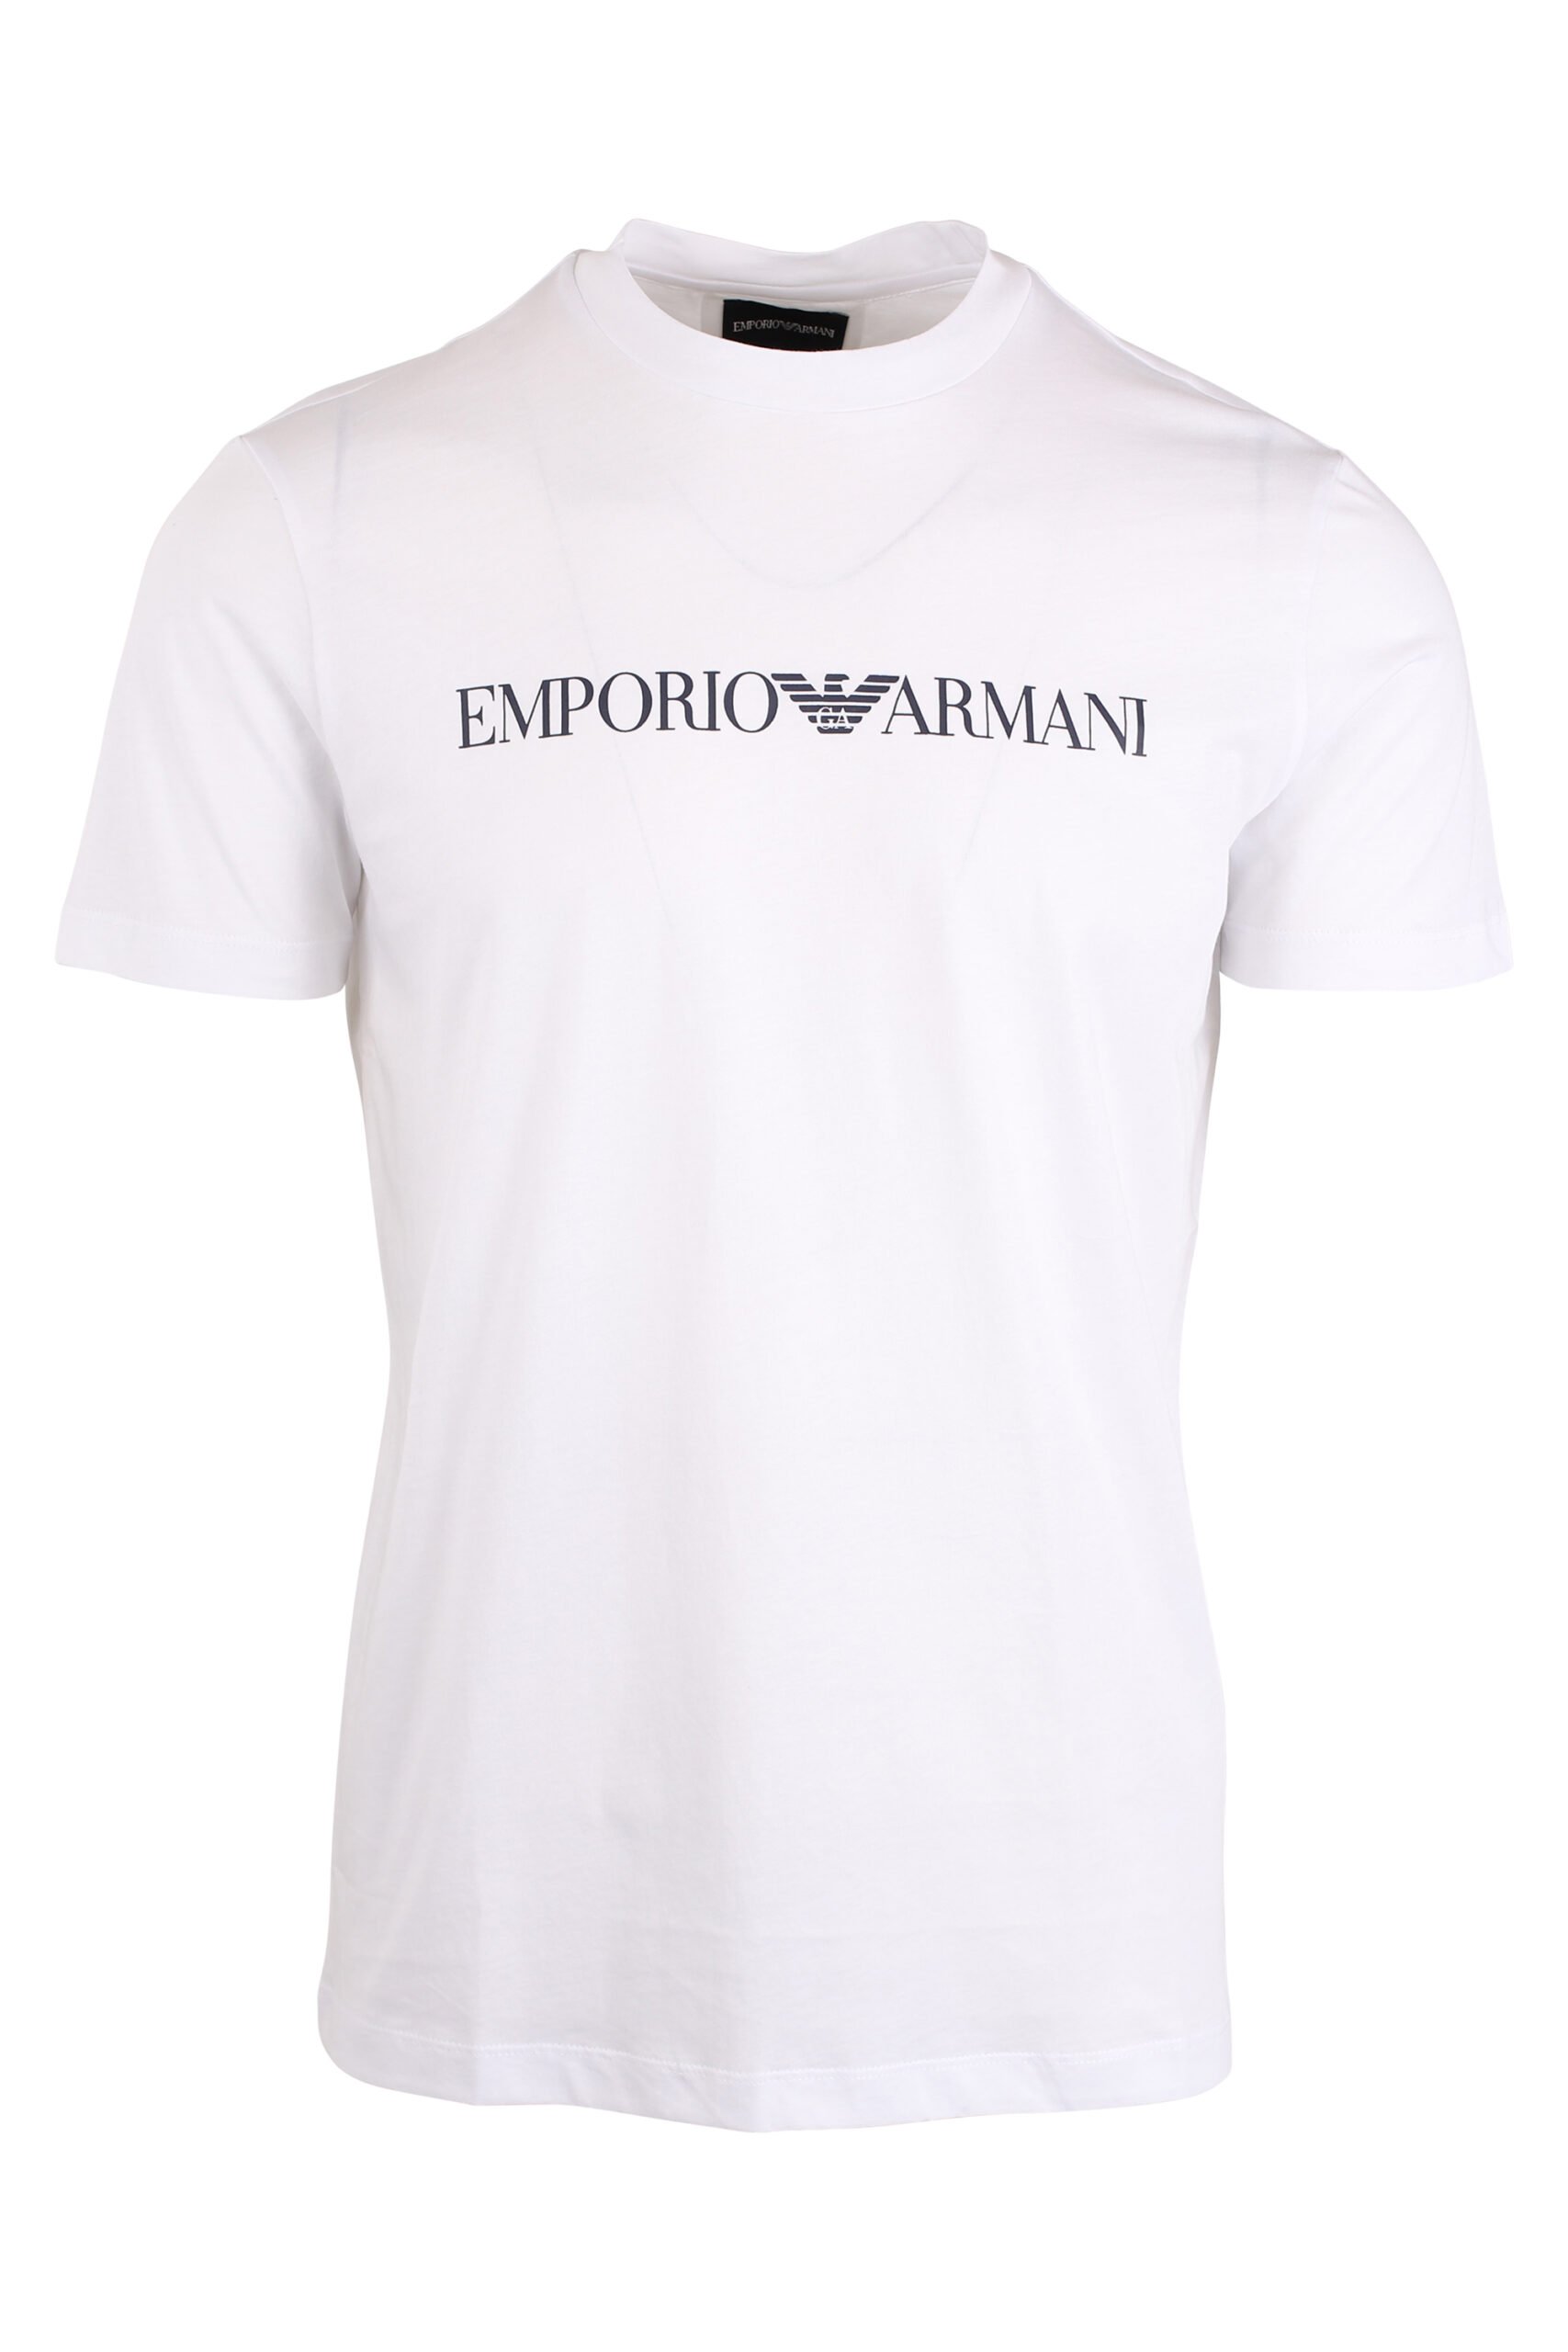 Emporio Armani - Camiseta blanca maxilogo letras negras BLS Fashion